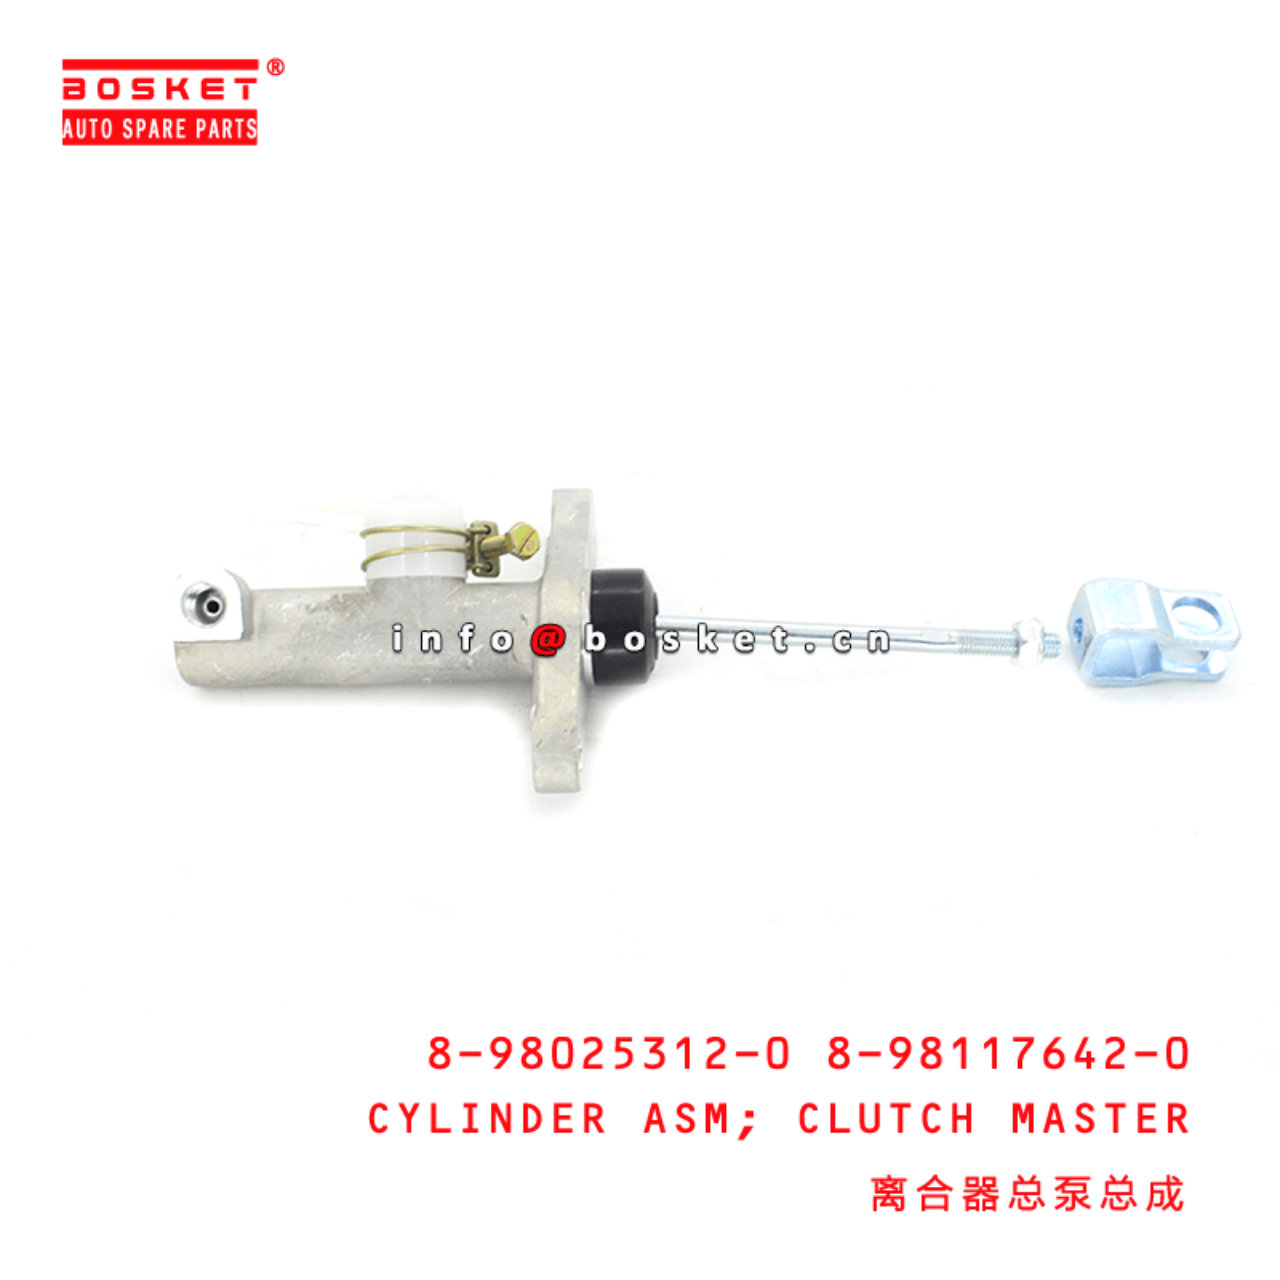 8-98025312-0 8-98117642-0 Clutch Master Cylinder Assembly 